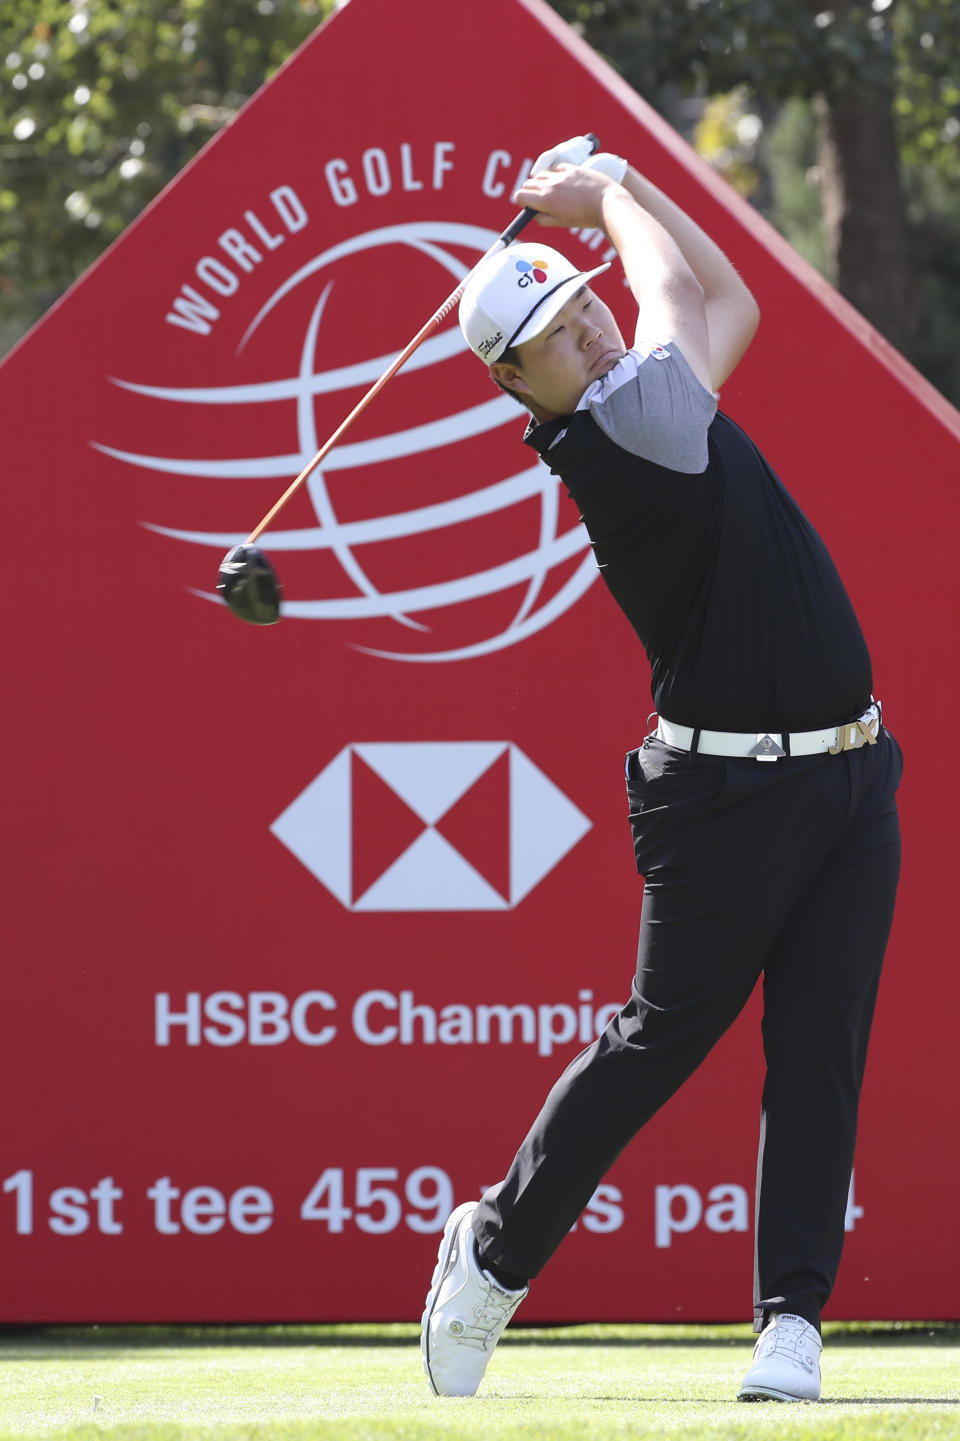 Sungjae Im of South Korea tees off during the HSBC Champions golf tournament at the Sheshan International Golf Club in Shanghai Friday, Nov. 1, 2019. (AP Photo/Ng Han Guan)